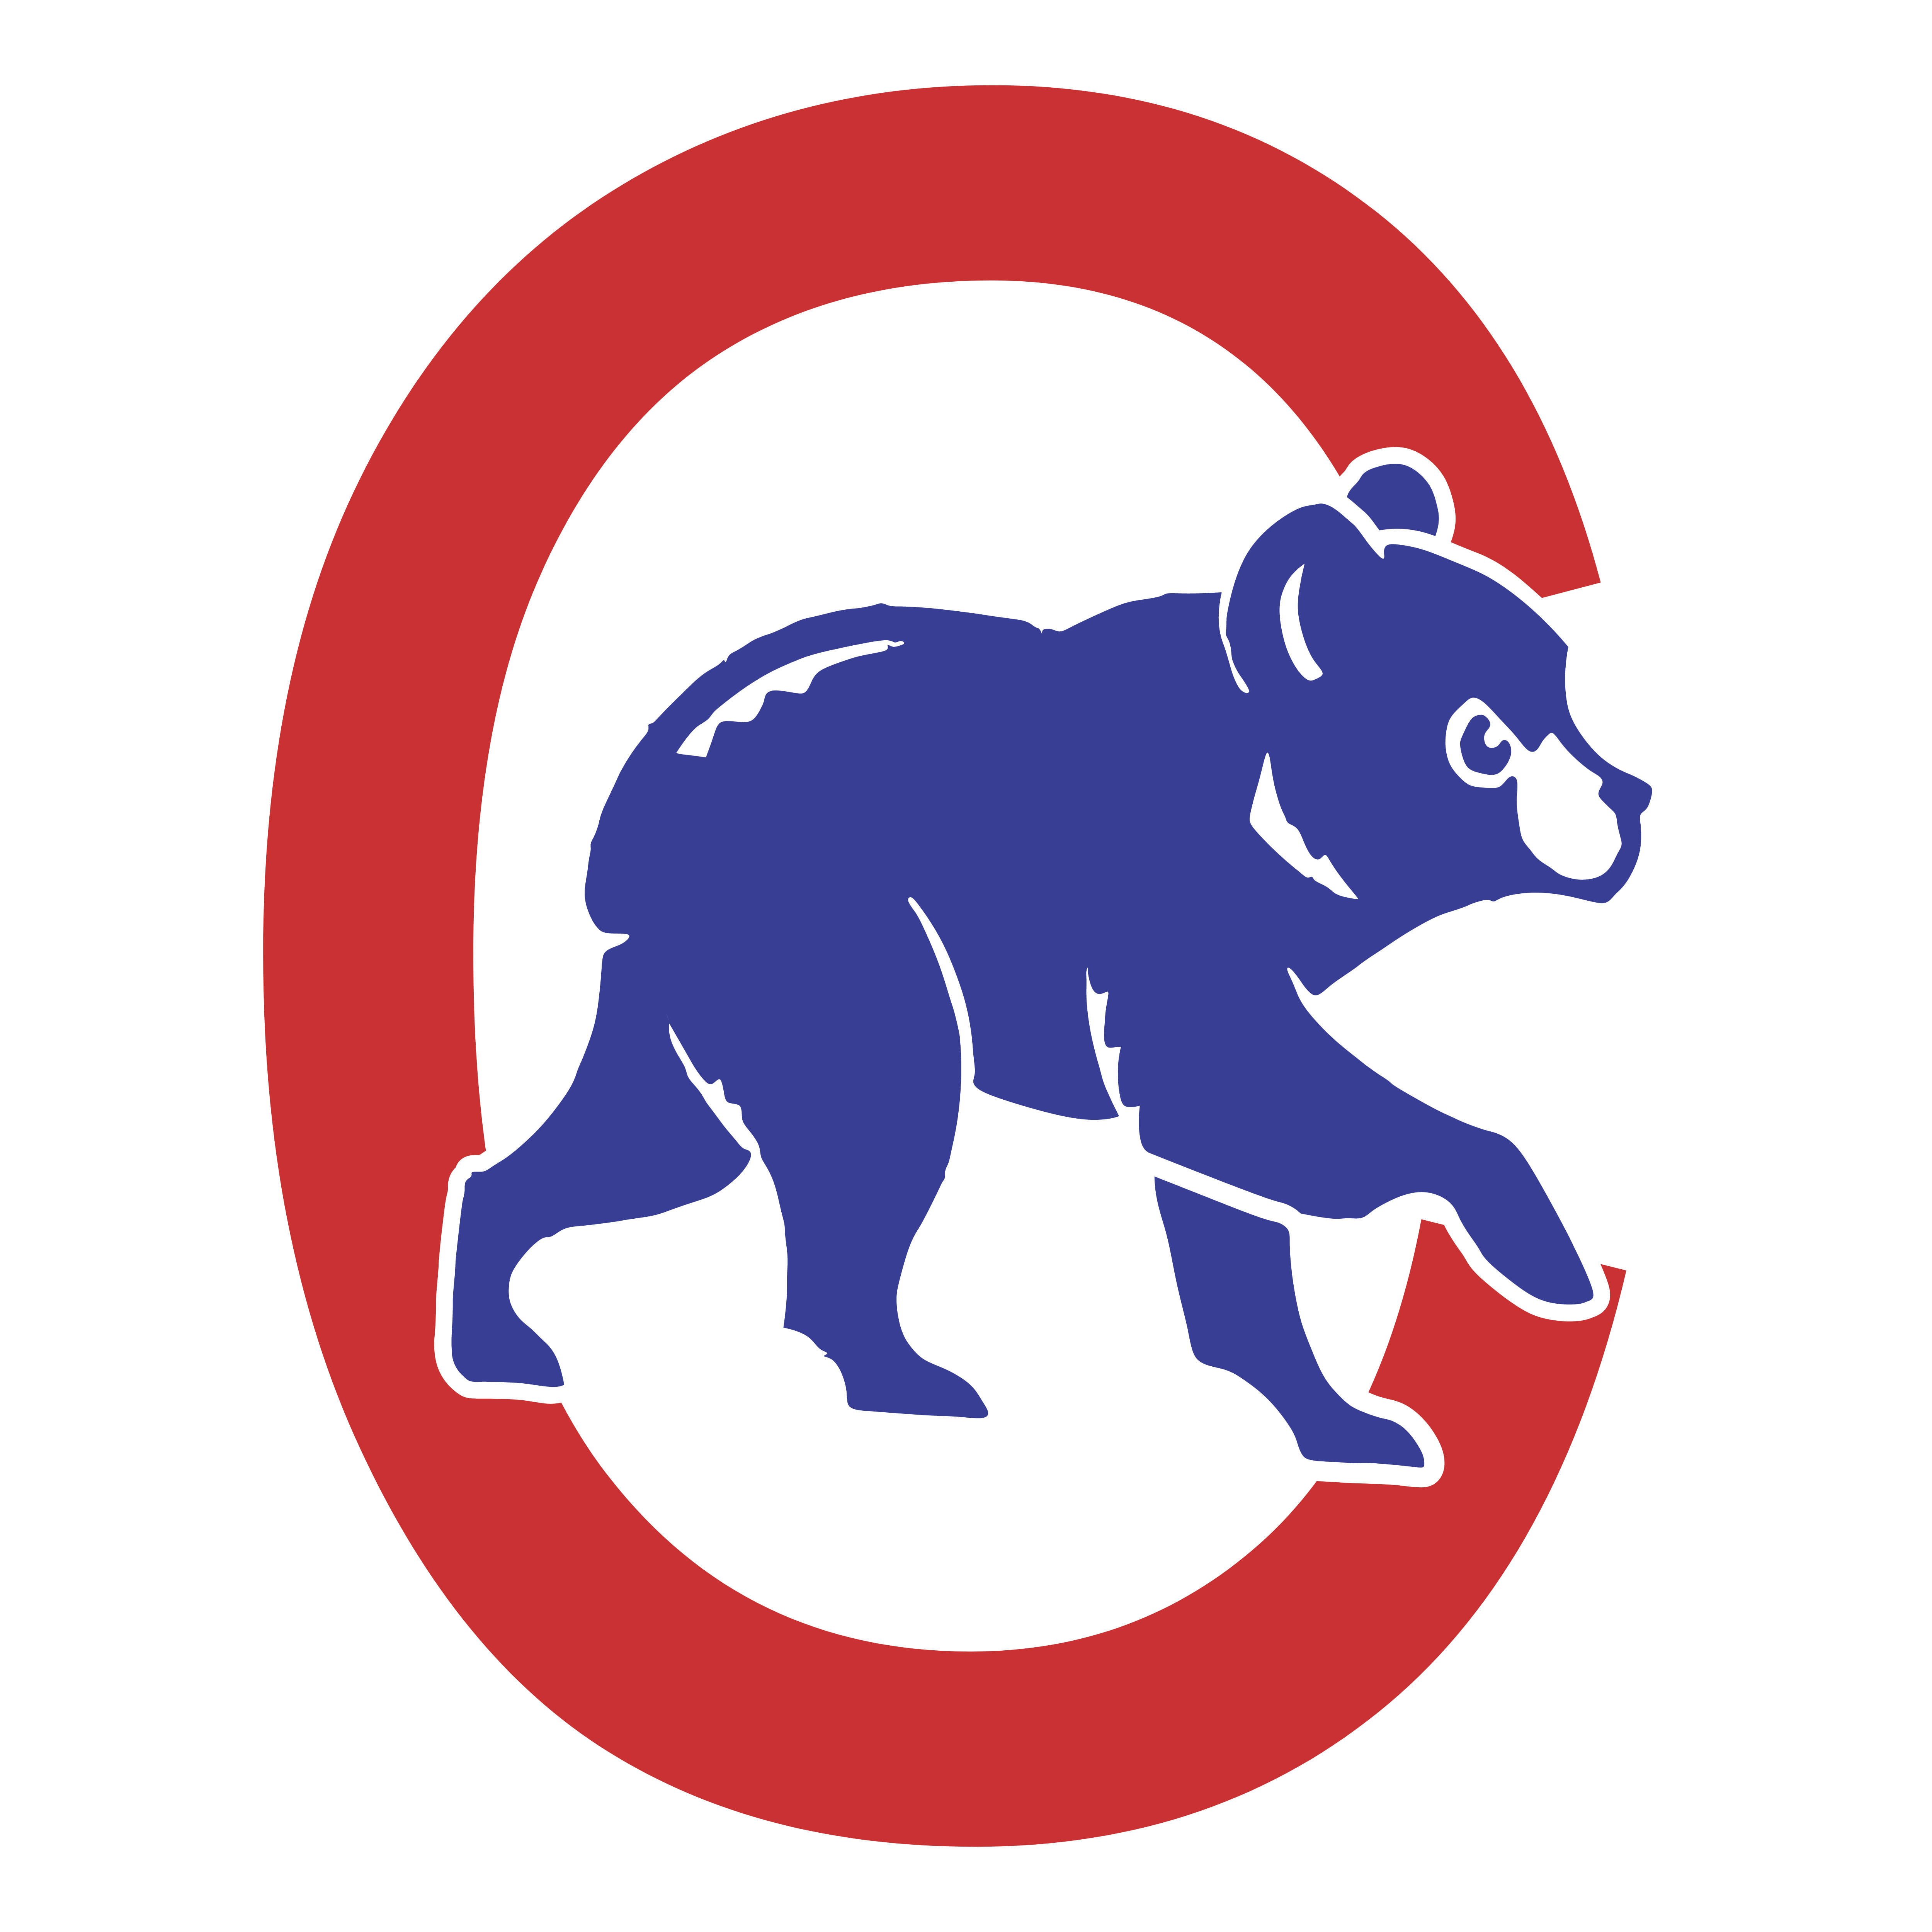 Chicago Cubs Logos Download